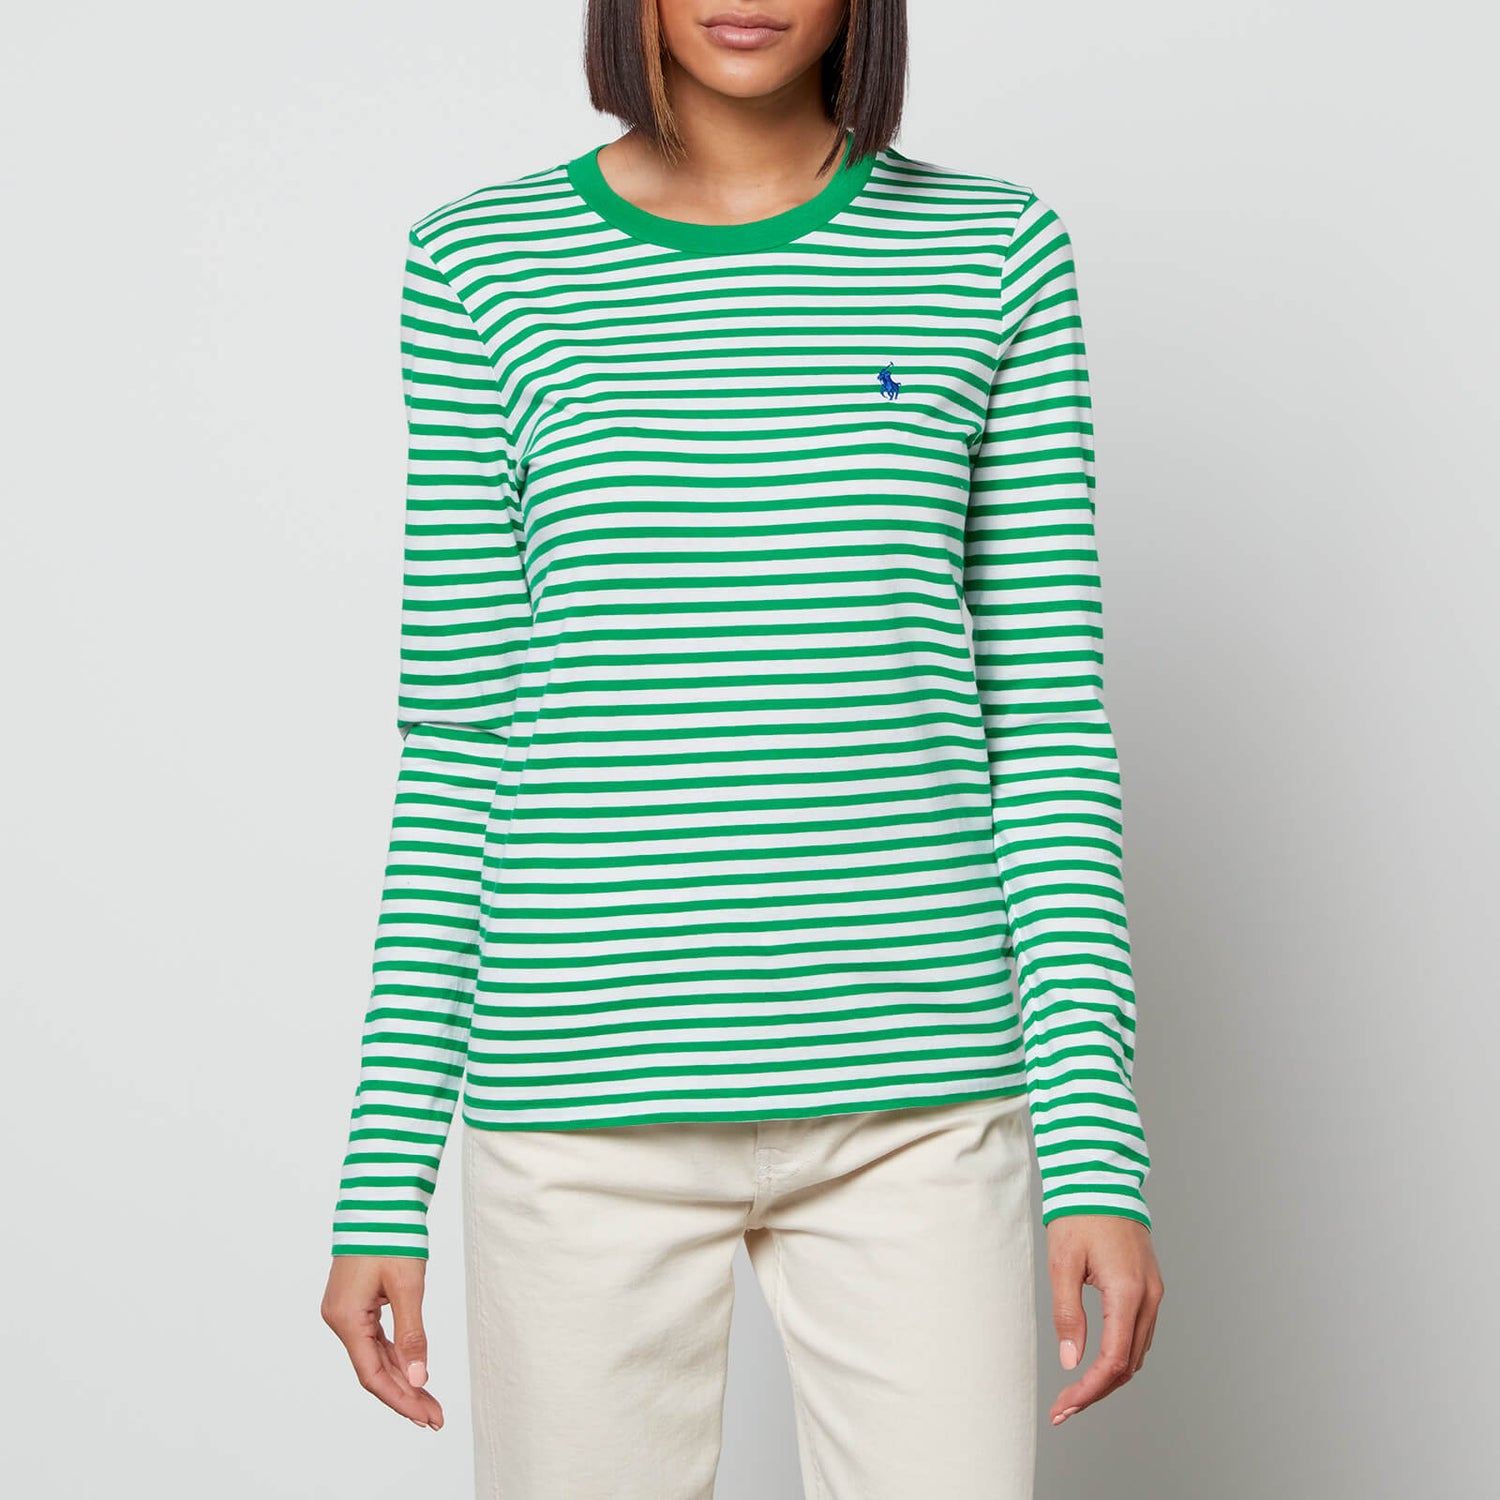 Polo Ralph Lauren Women's Stripe Long Sleeve T-Shirt - Cruise Green/White - XS